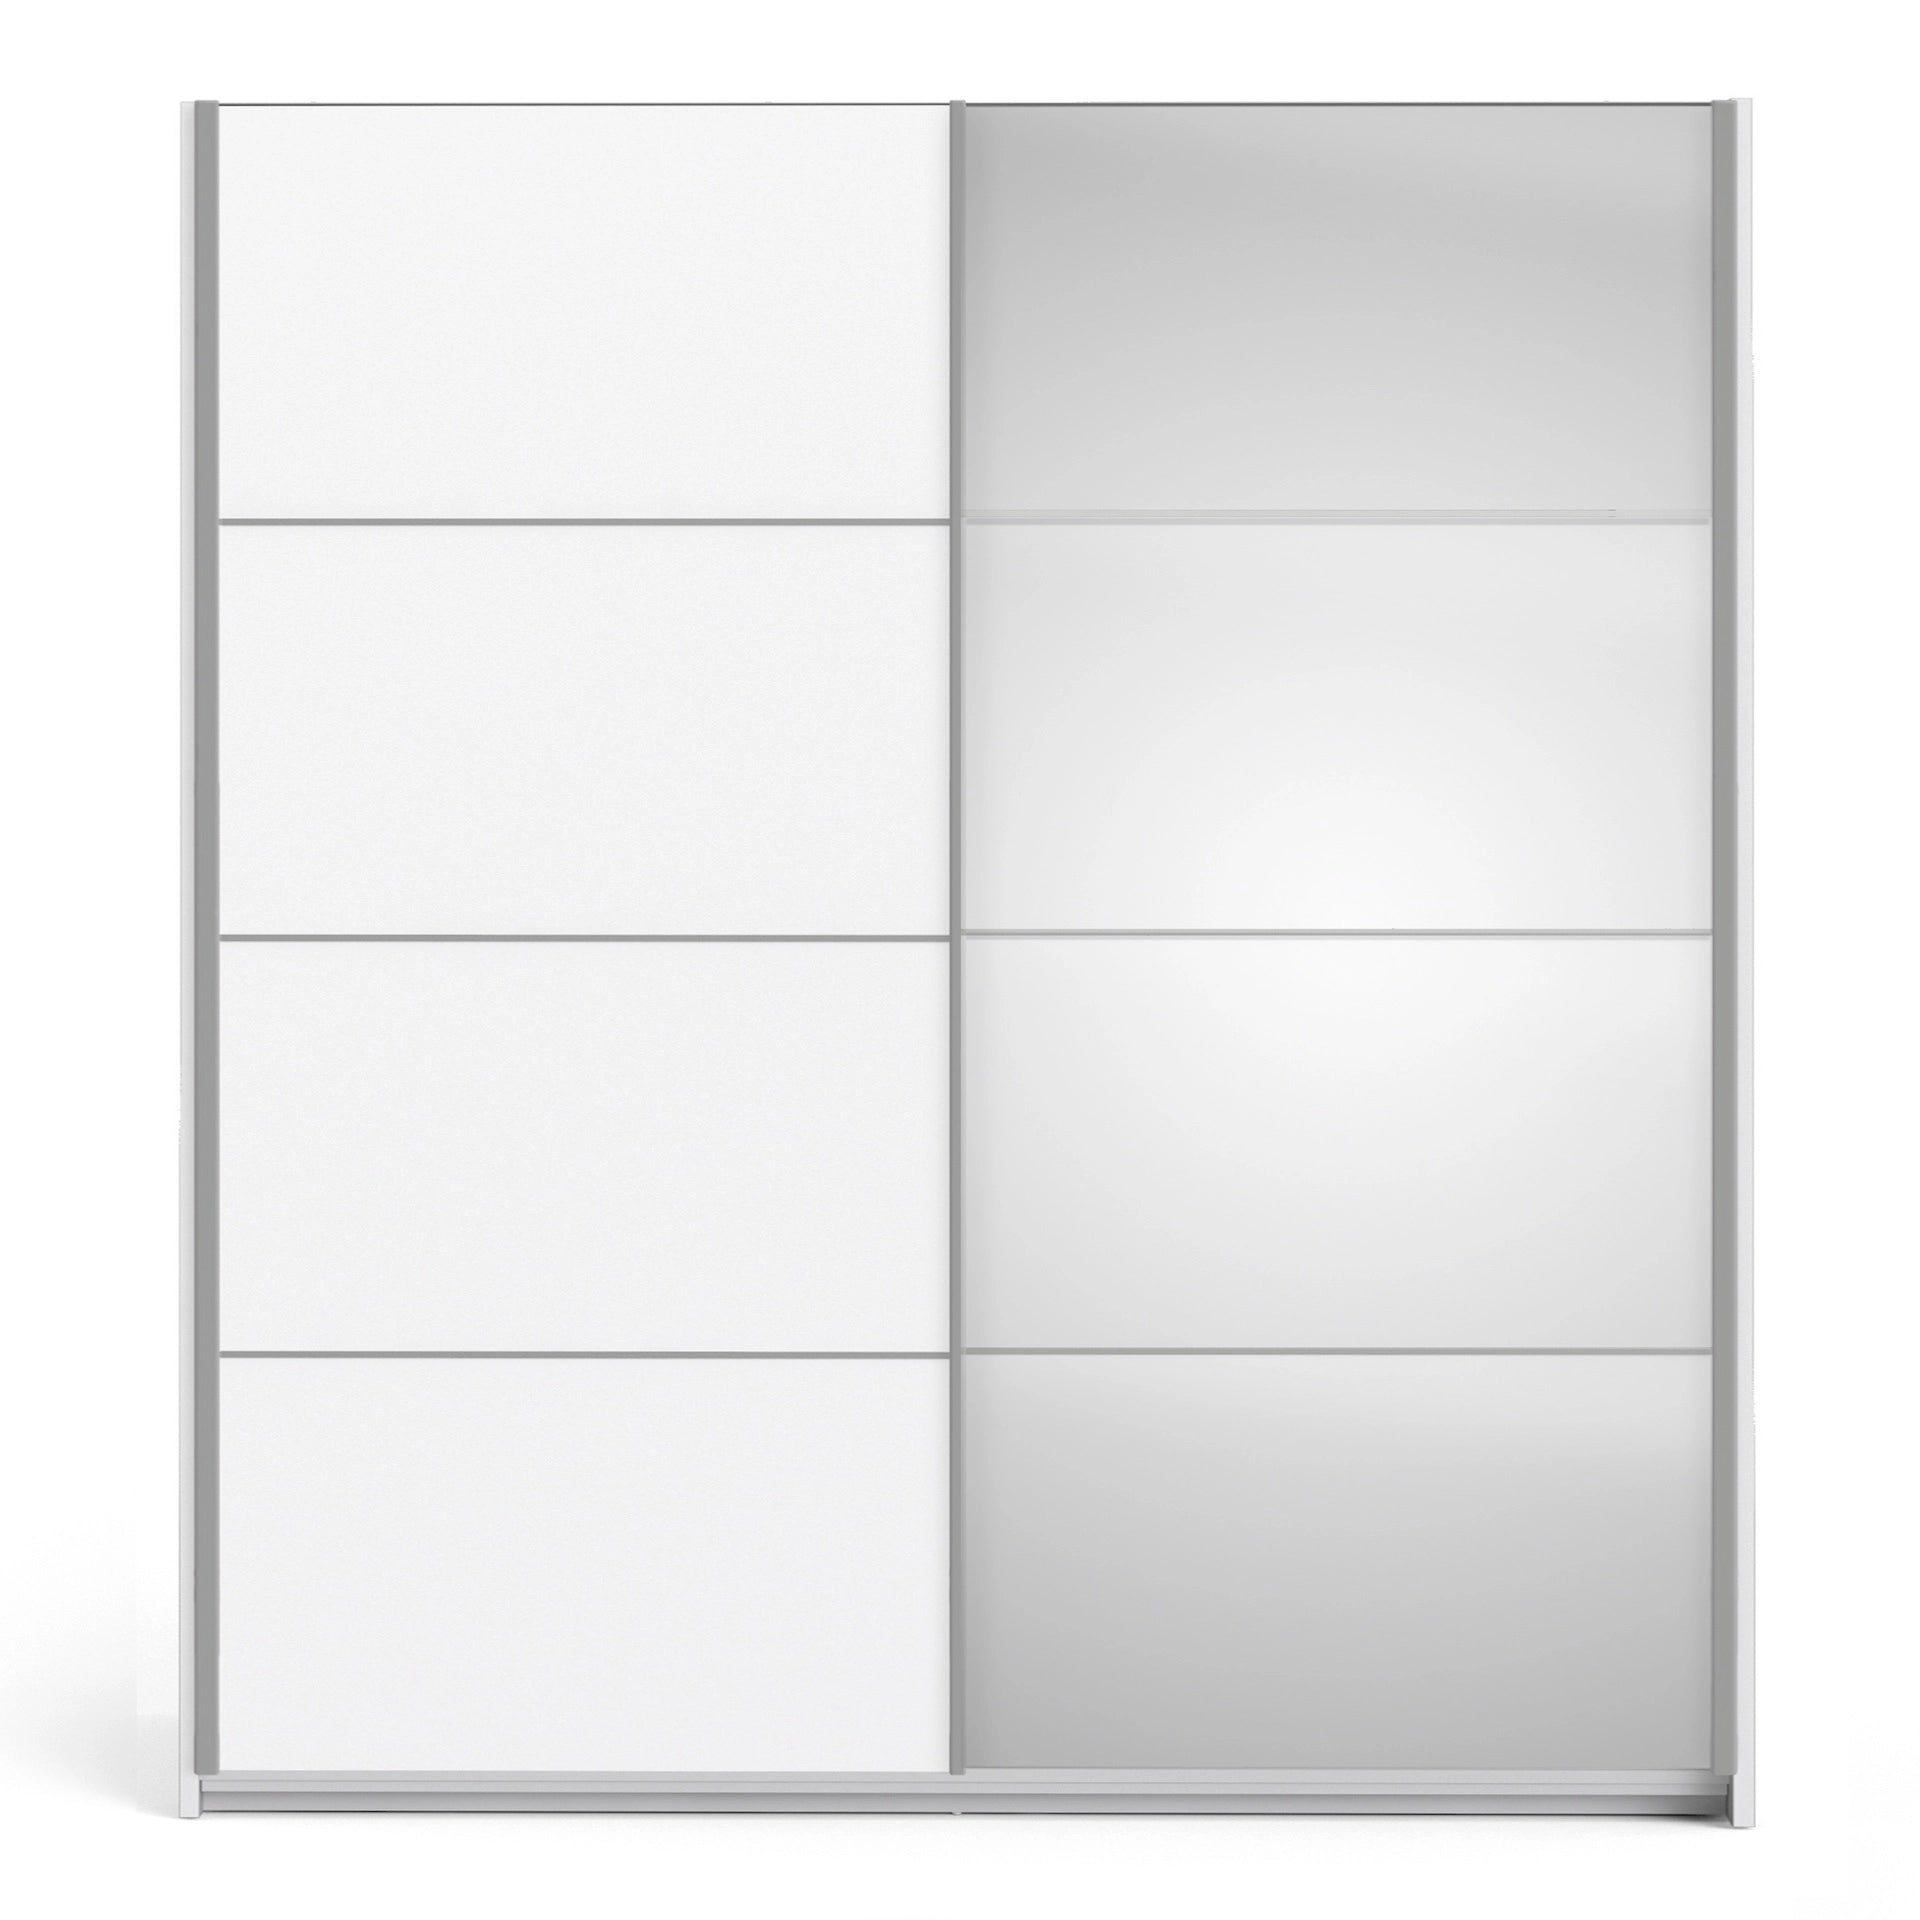 Furniture To Go Verona Sliding Wardrobe 180cm in White with White & Mirror Doors with 5 Shelves